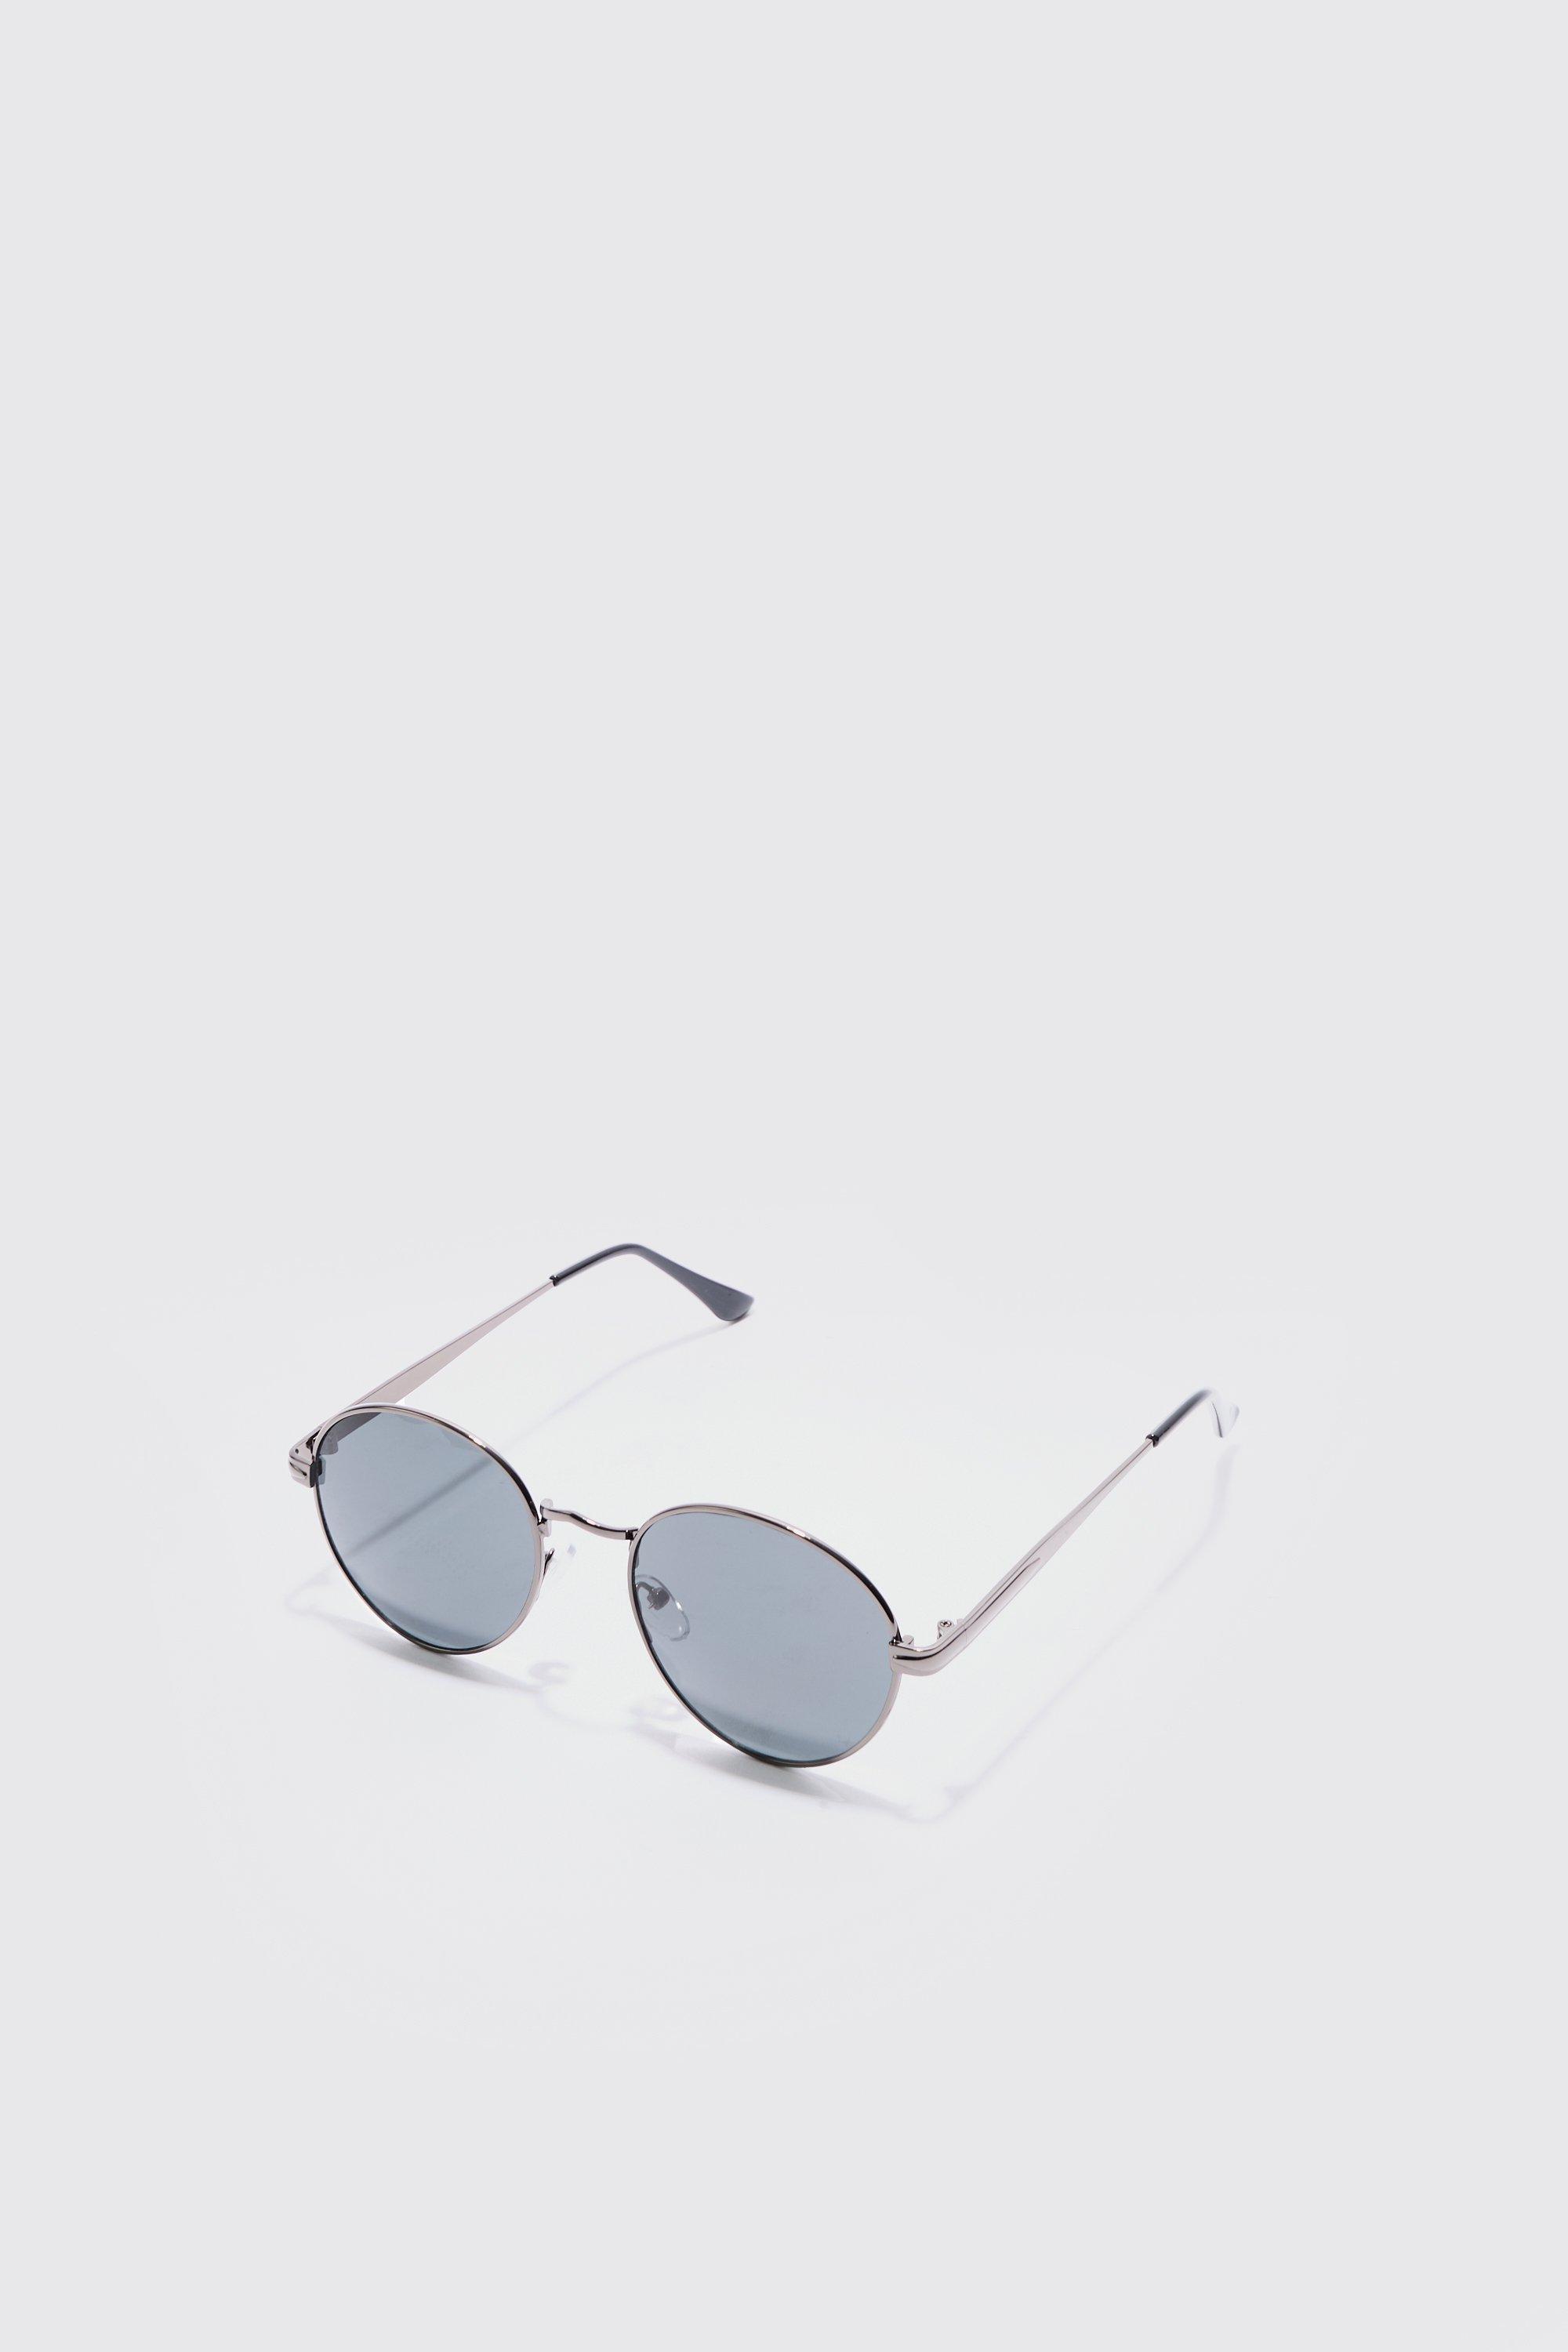 Image of Metal Round Sunglasses In Silver, Grigio